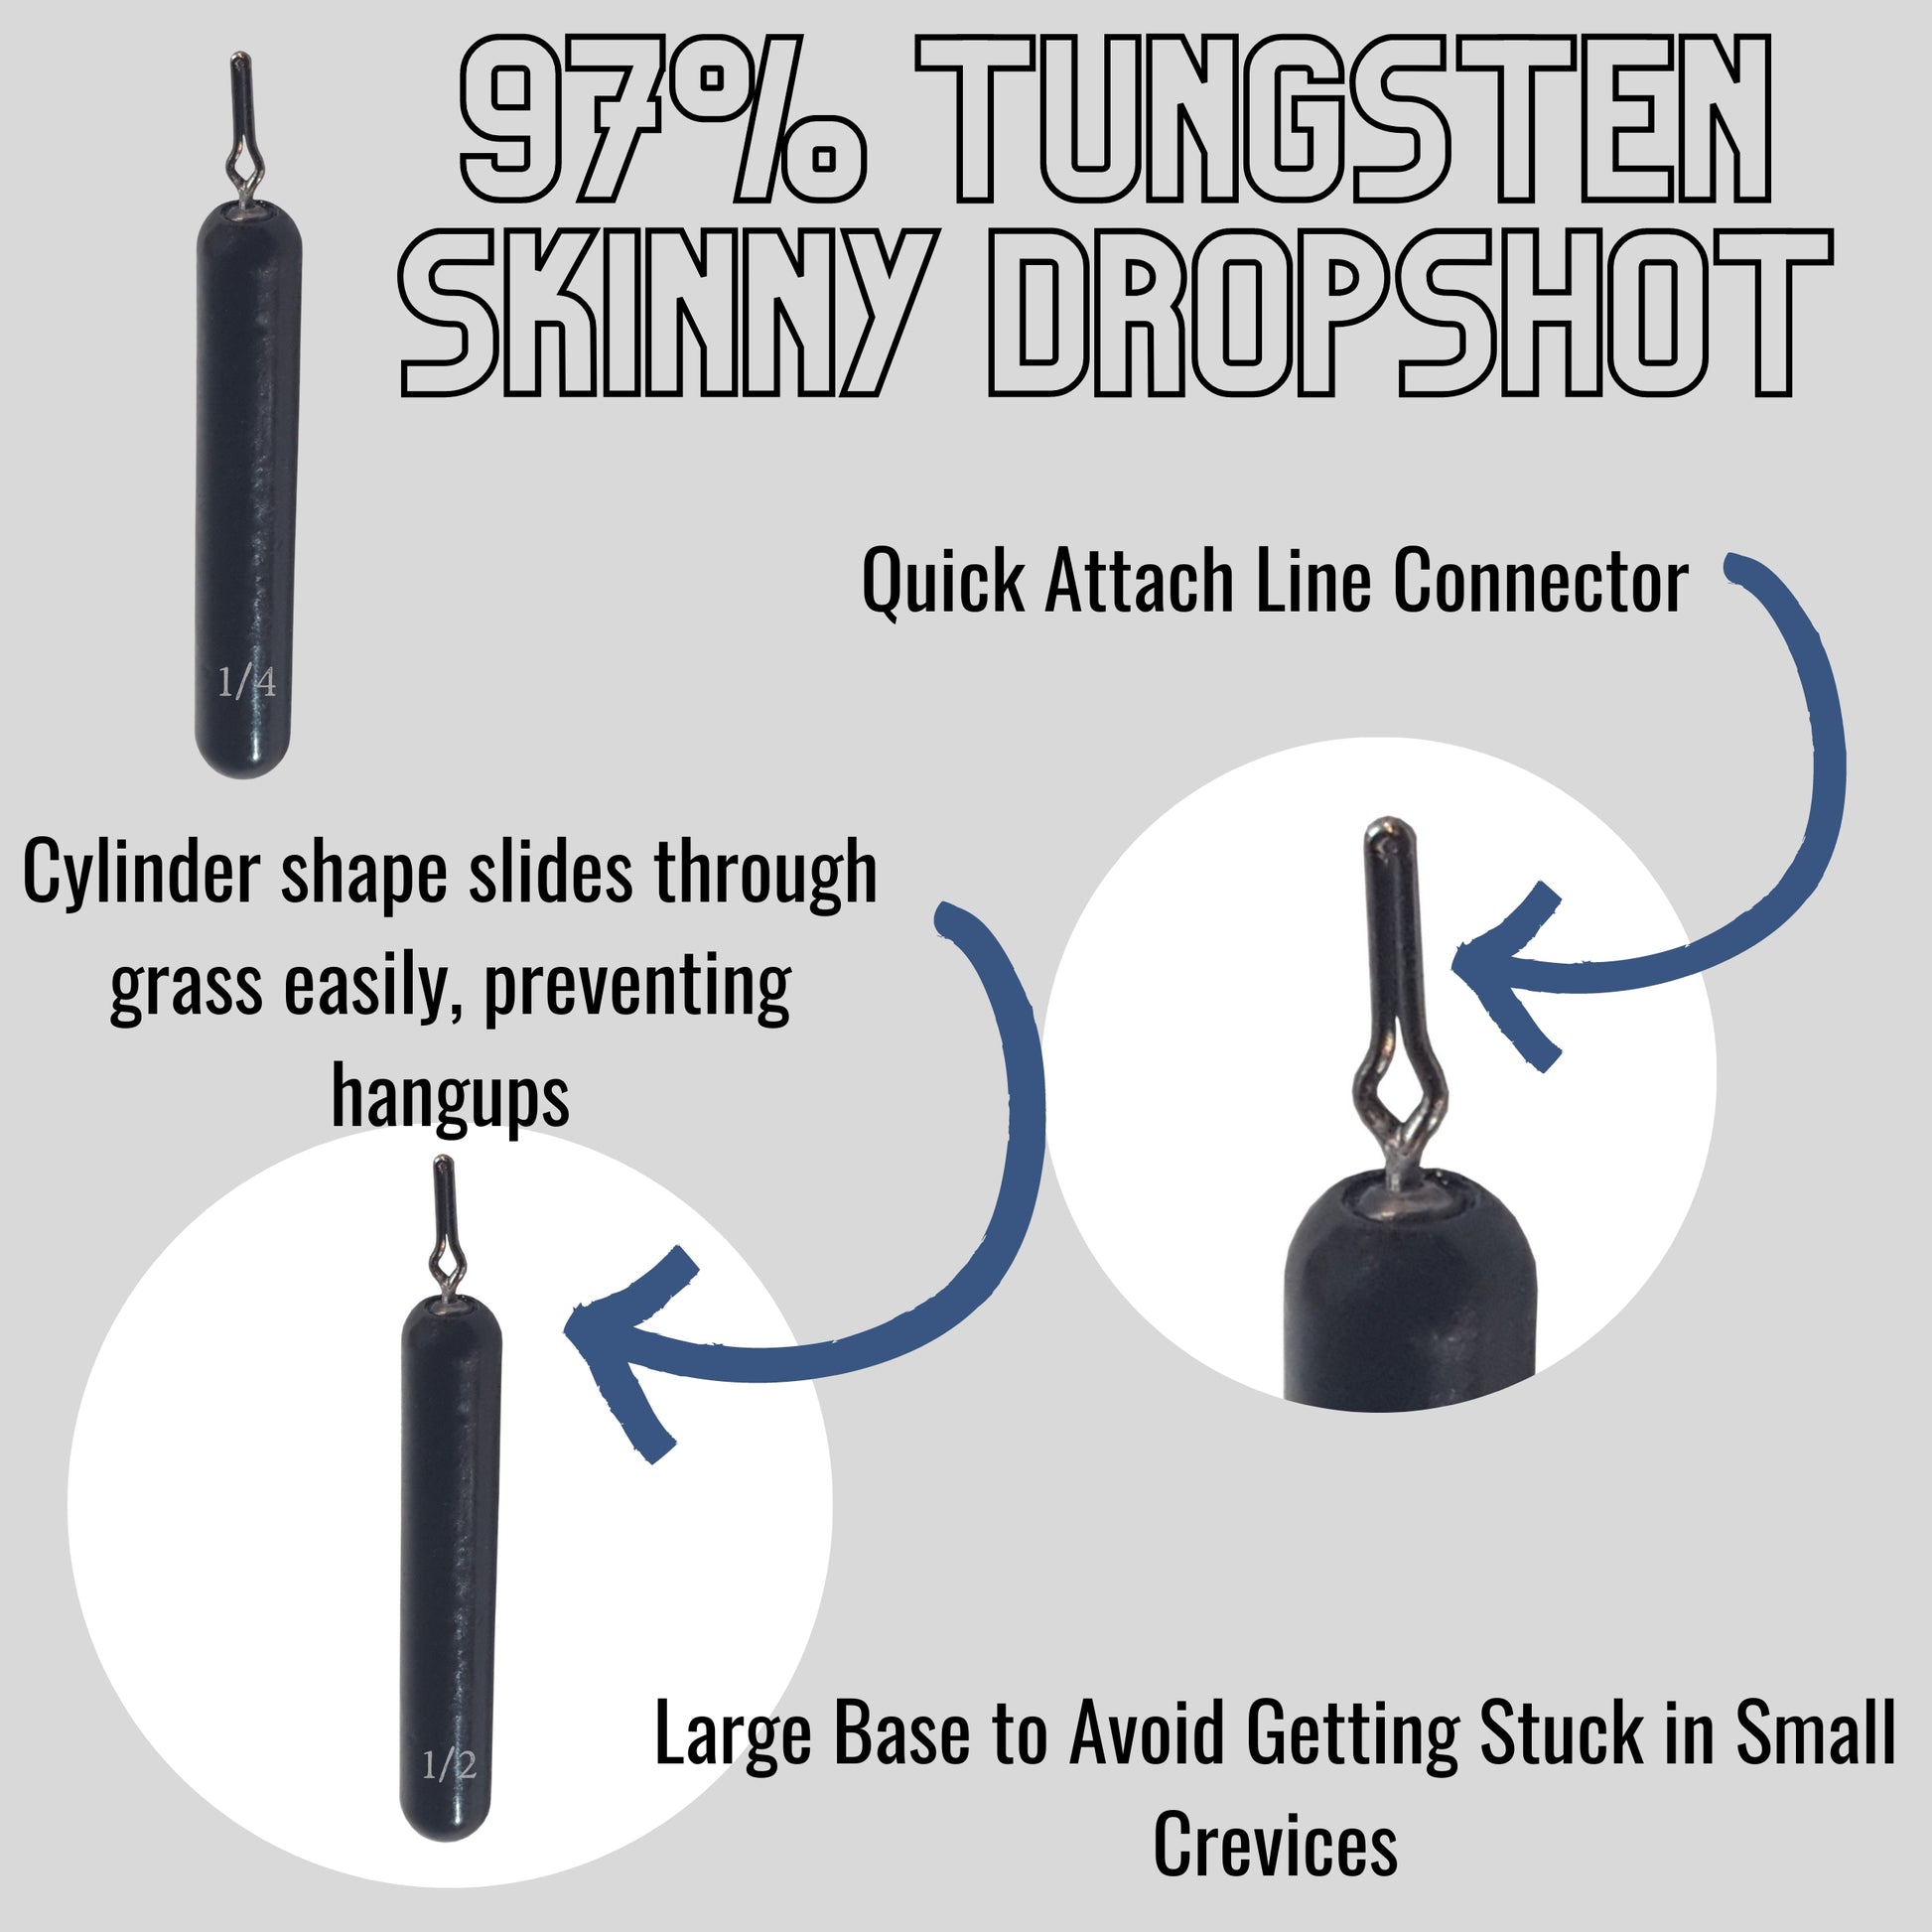 Reaction Tackle Drop Shot Bulk Tungsten Weights